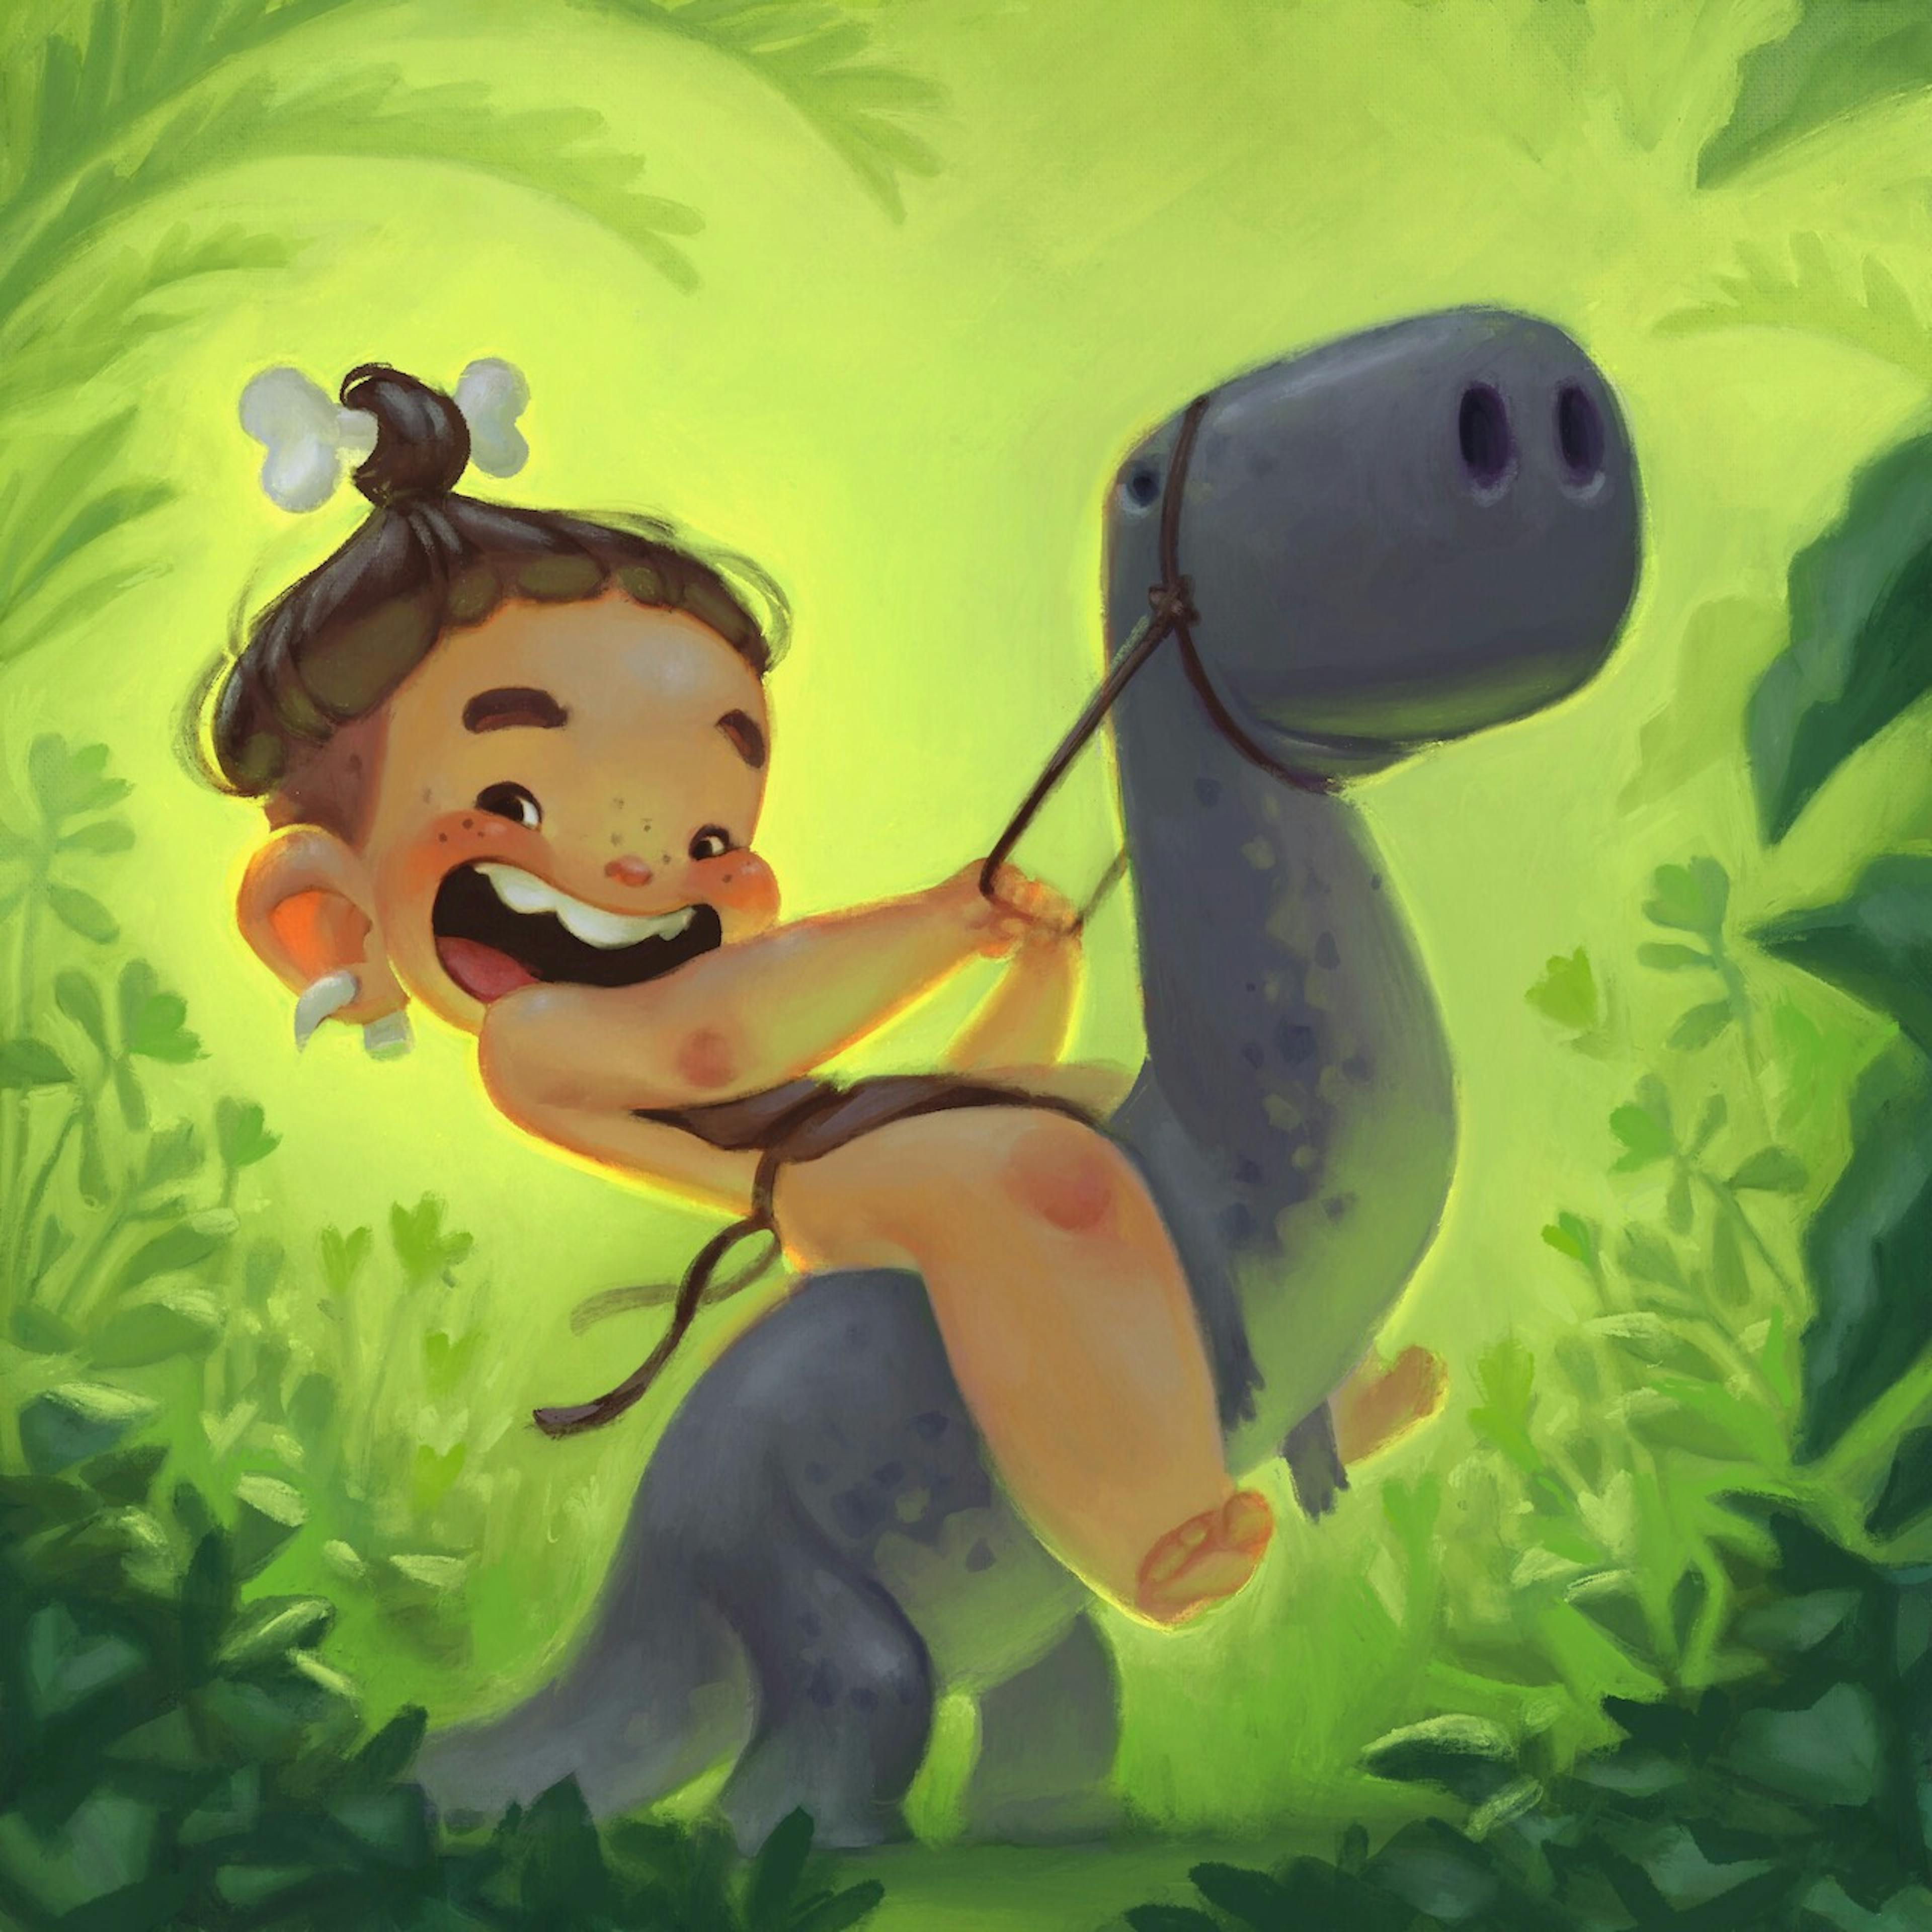 A boy riding a dinosaur